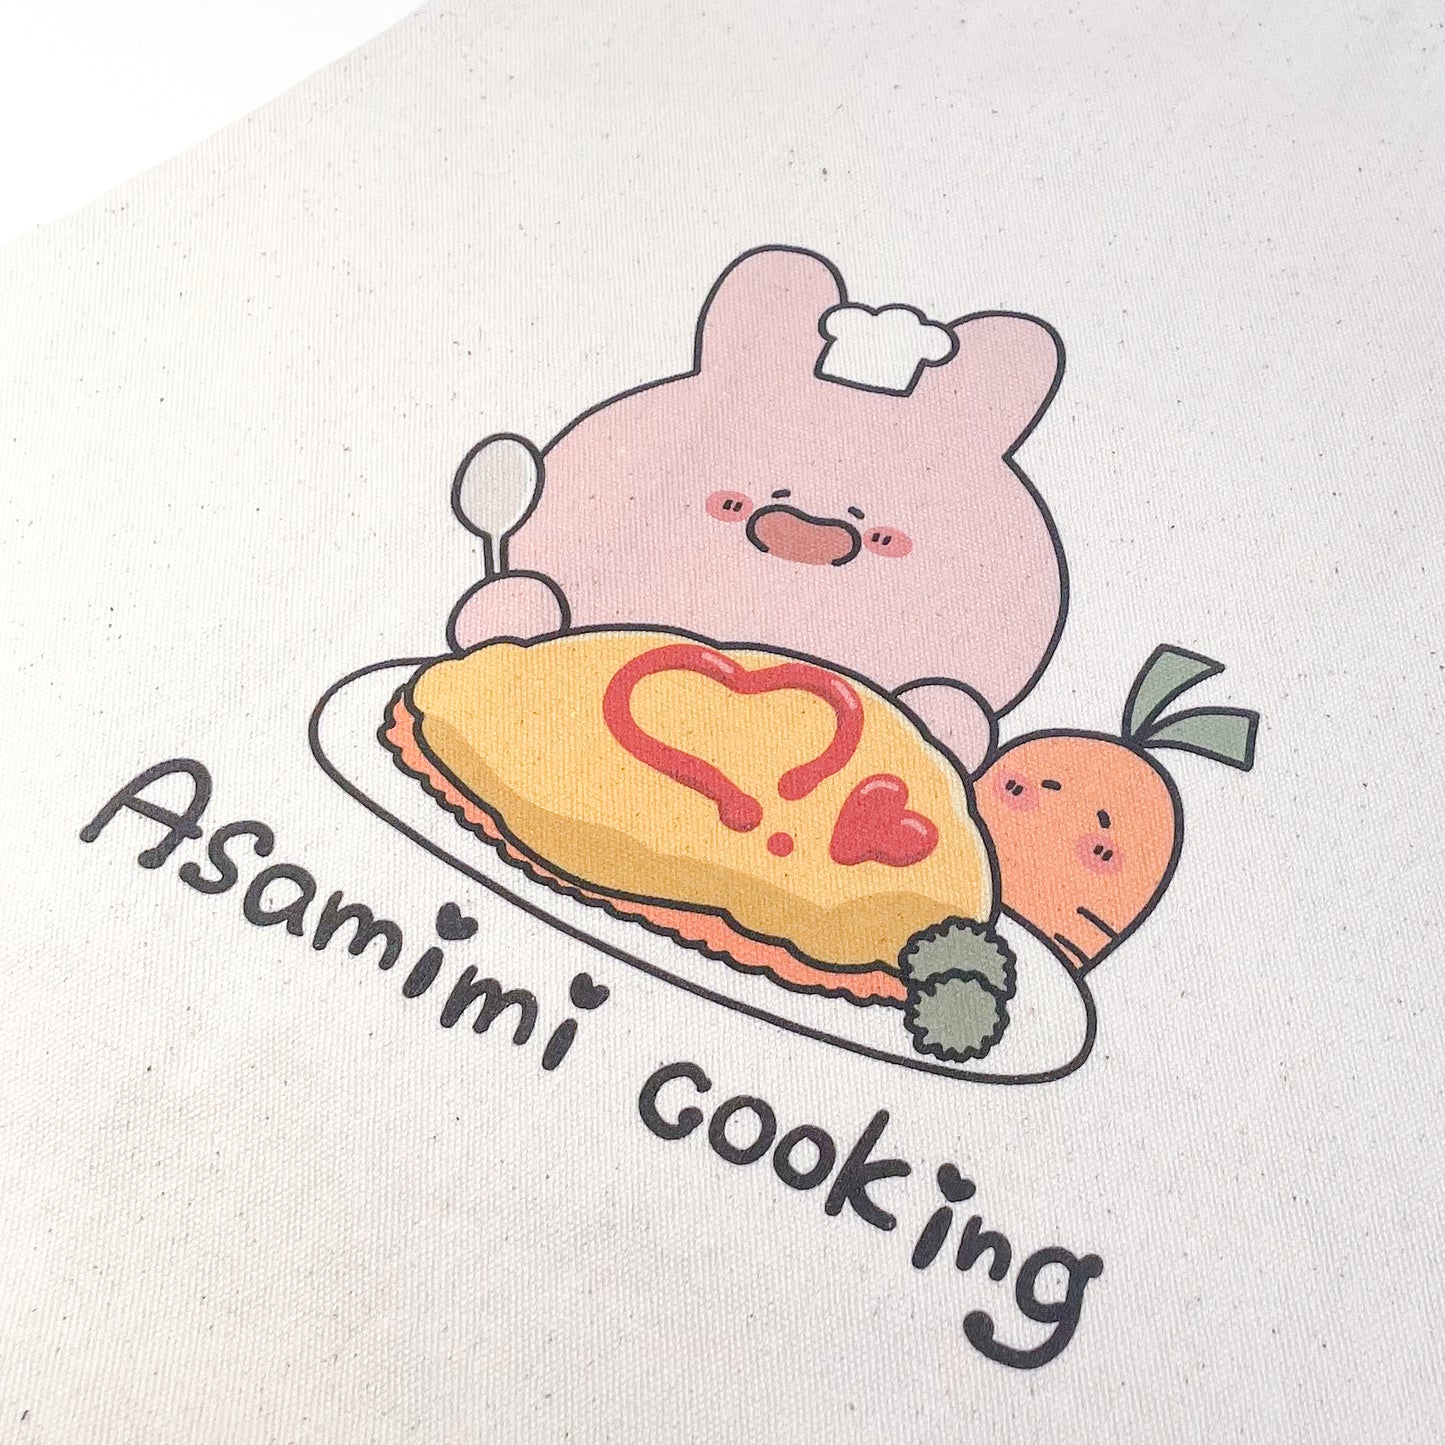 [Asamimi-chan] Tablier (Cuisine Asamimi)